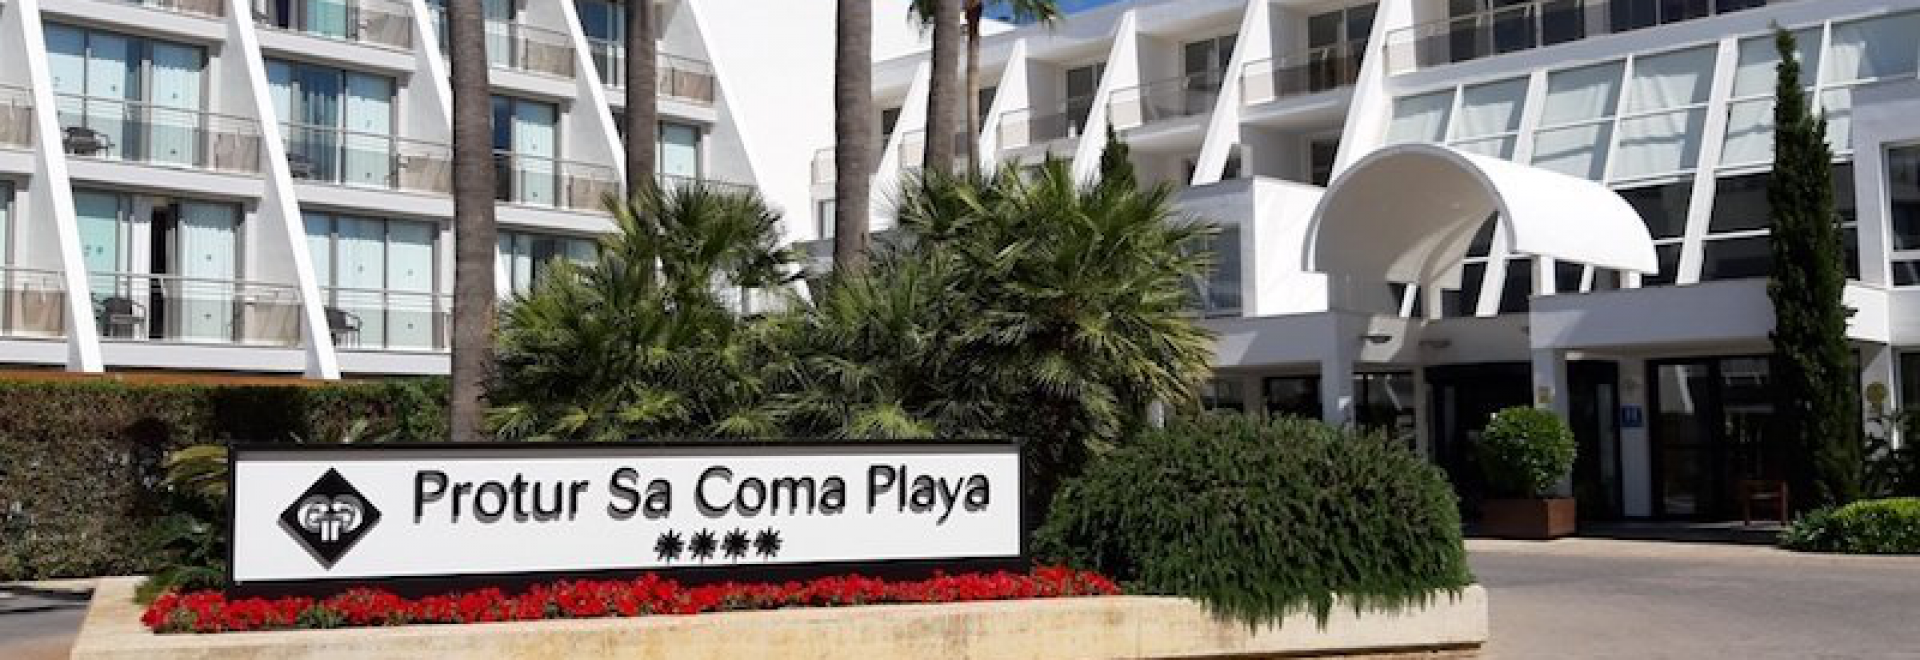 Protur Sa Coma Playa Hotel & Sport Centre, Balearic Islands - Book. Travel. Play.